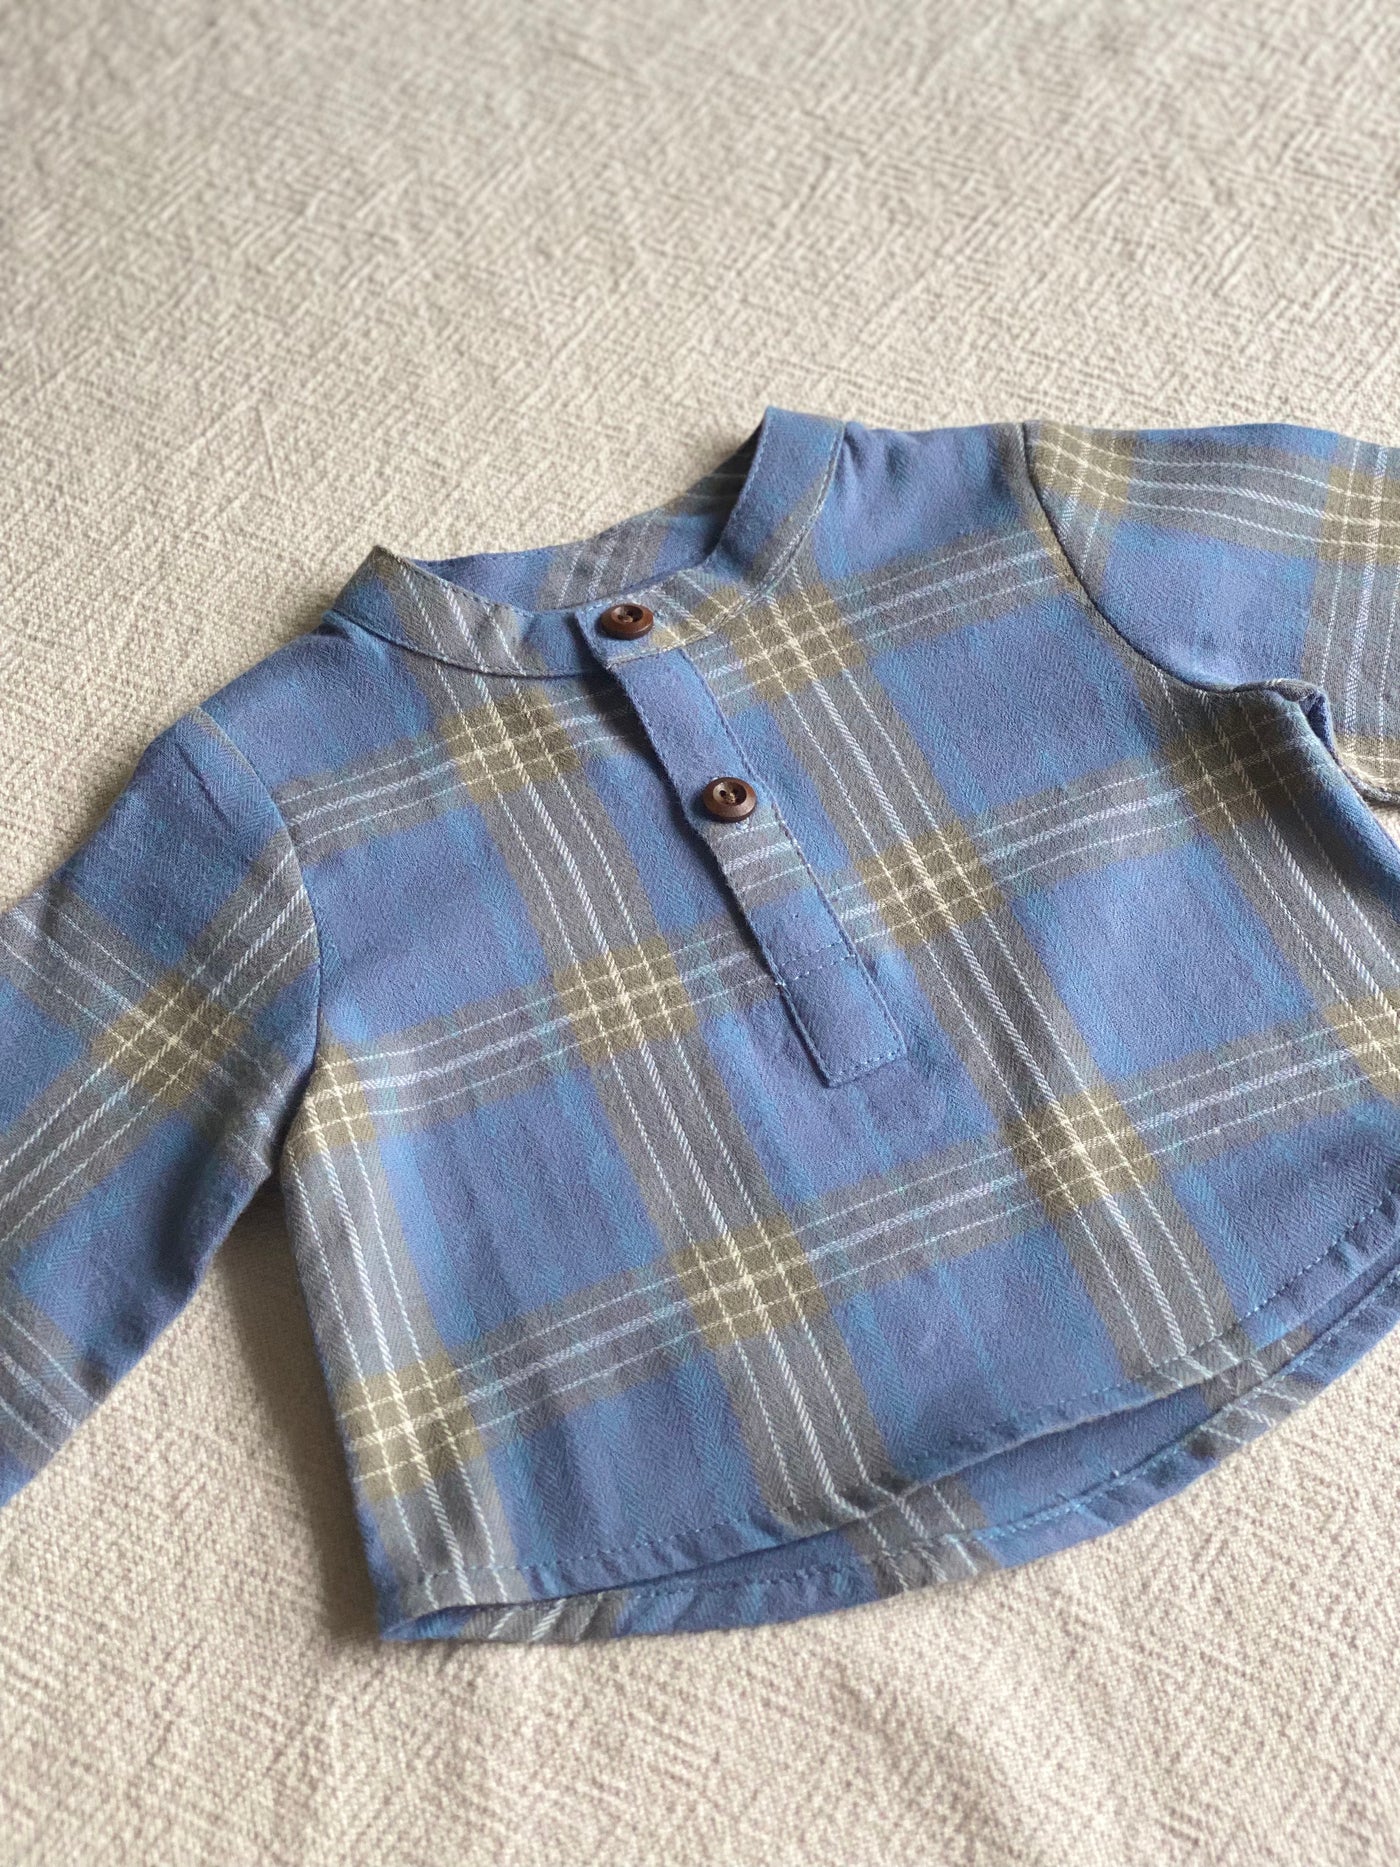 OLIVER Henley Shirt in Blue Tartan